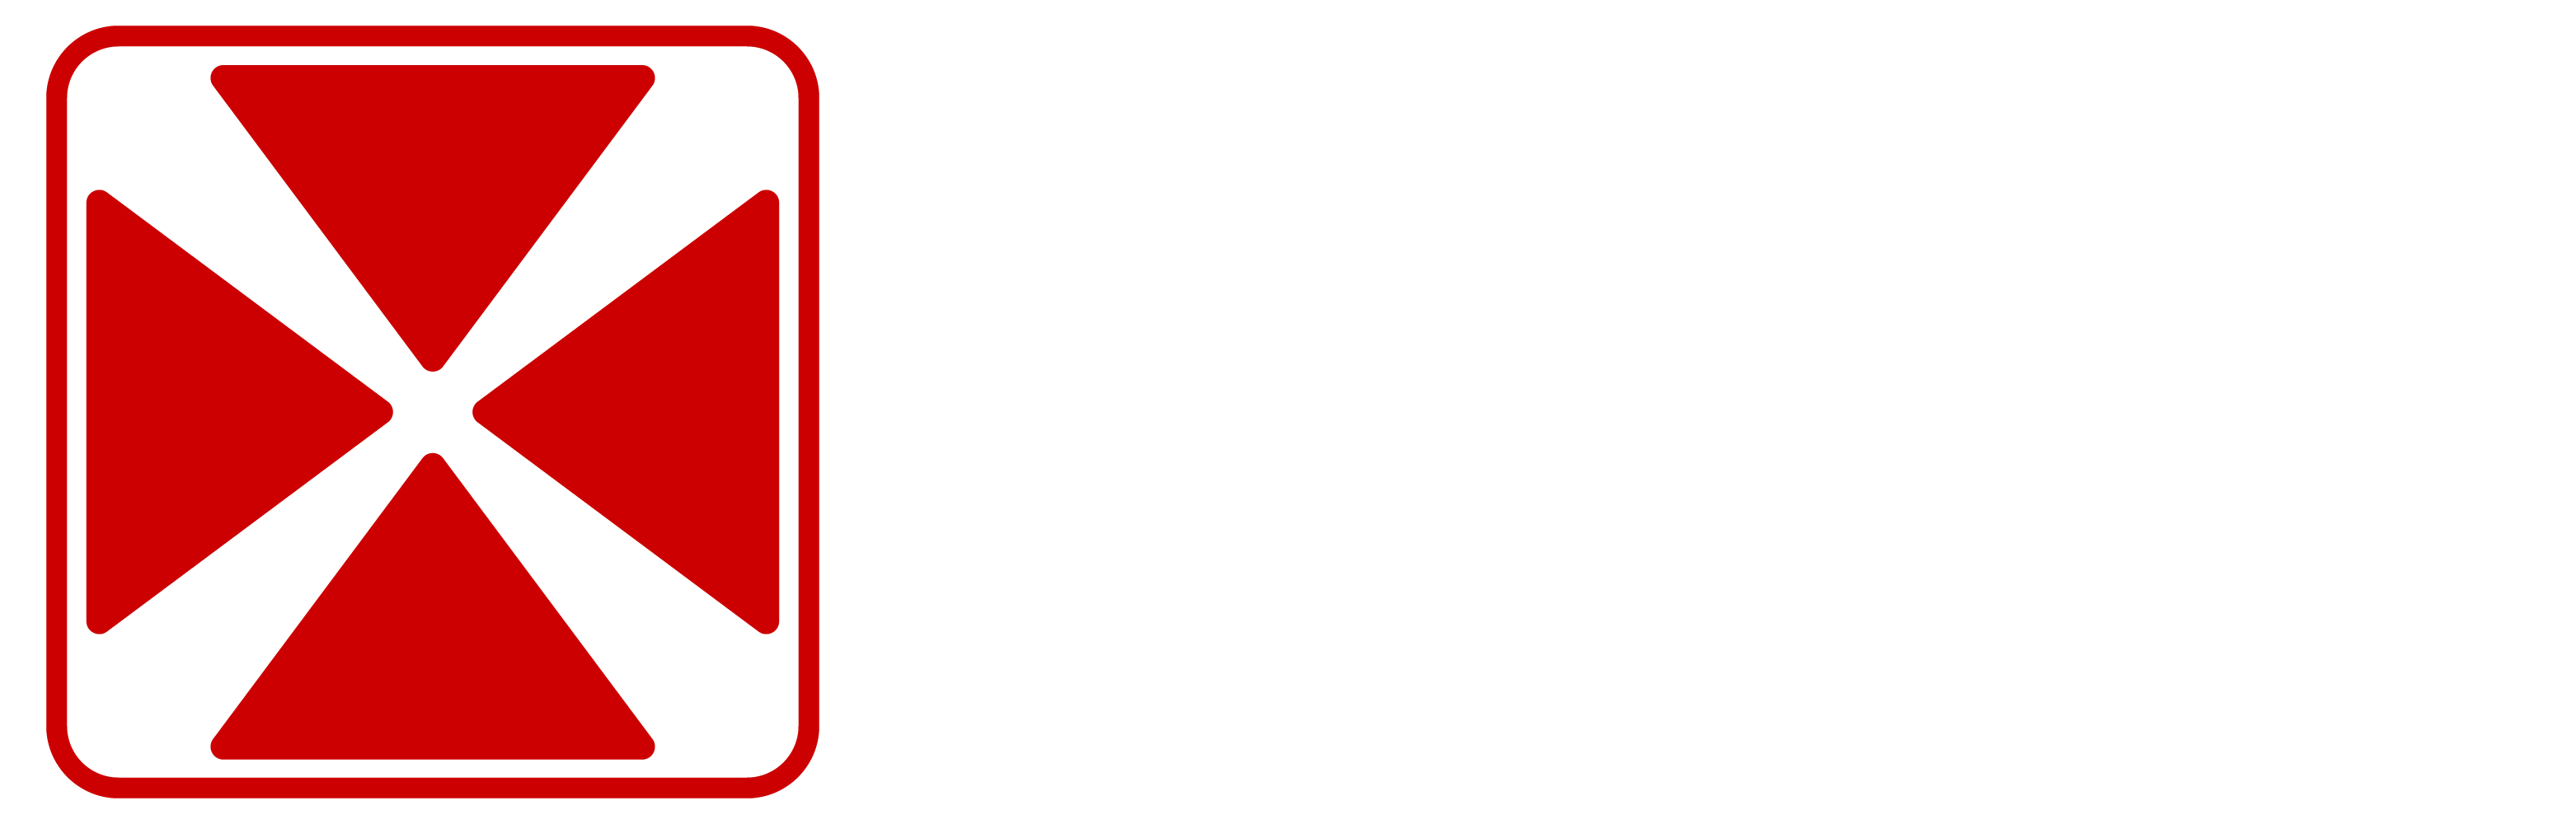 HMCM logo two-colour REVERSED